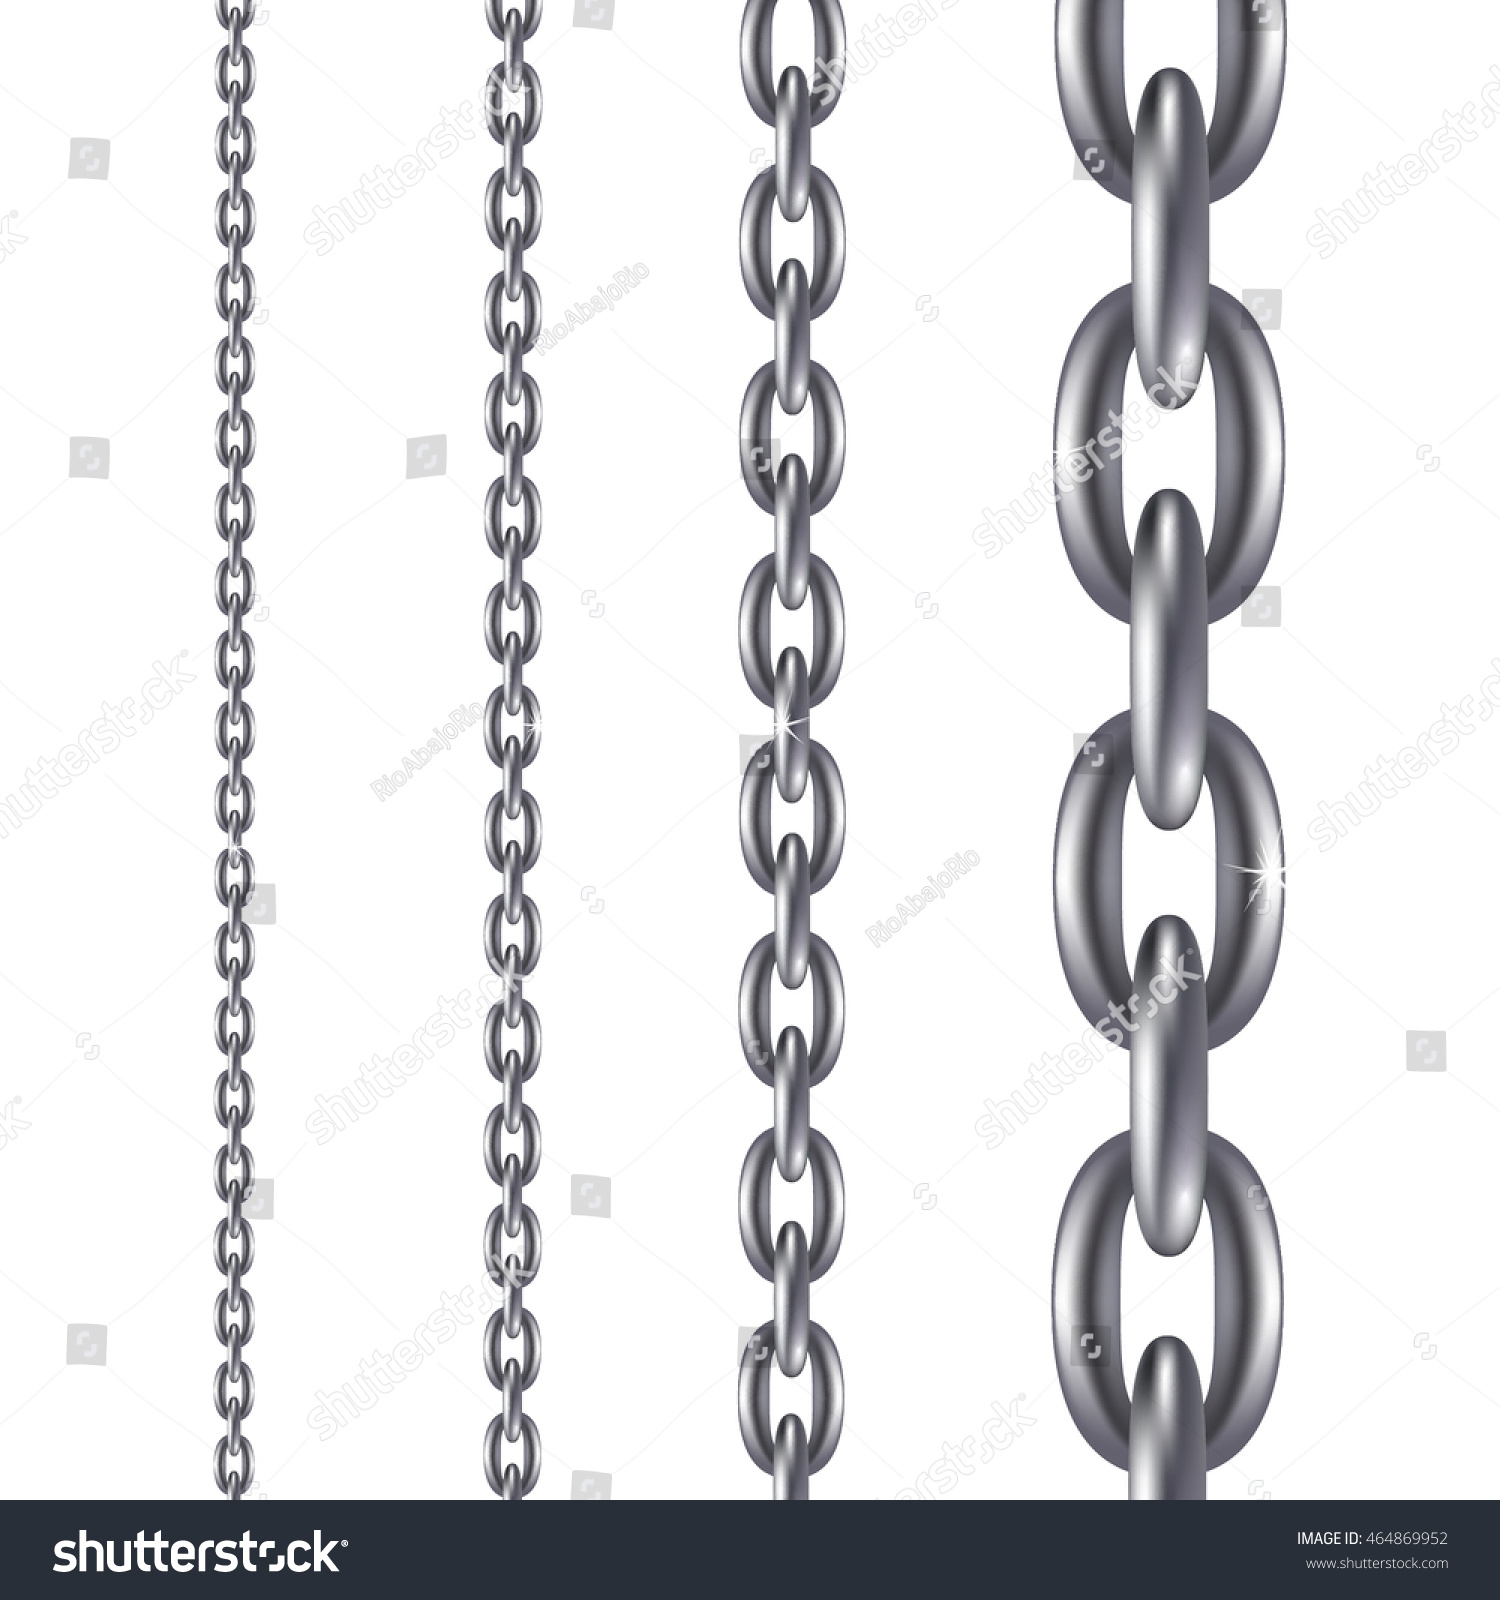 Mesh Silver Chain Vector Metallic Chain Vectores En Stock 464869952 ...